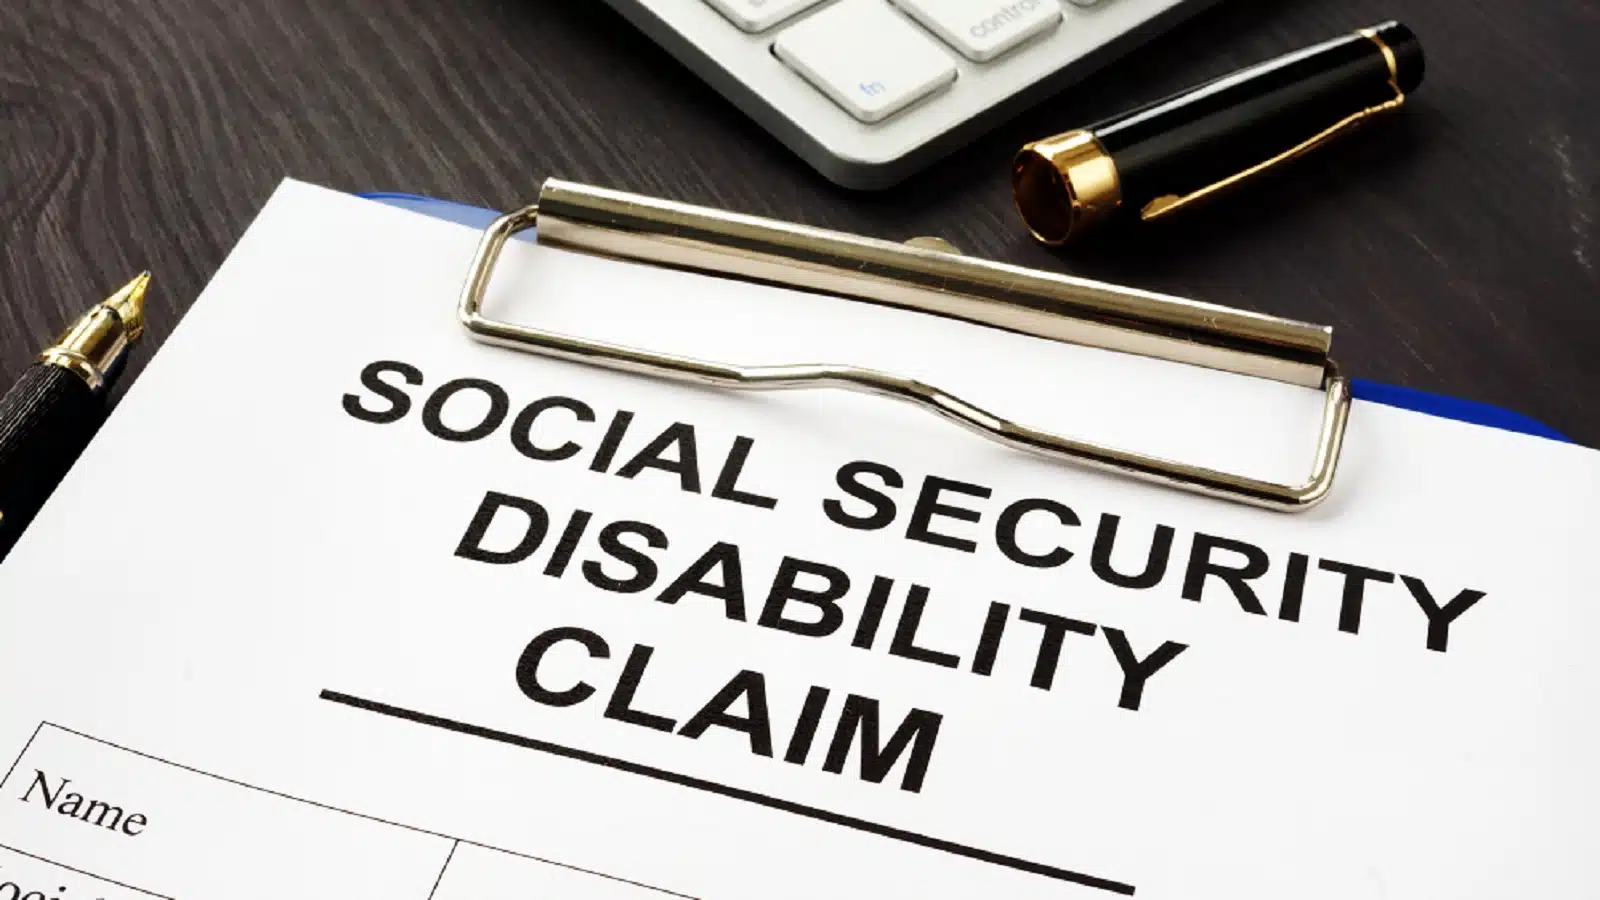 Social Security Disability Claim Form Stock Photo